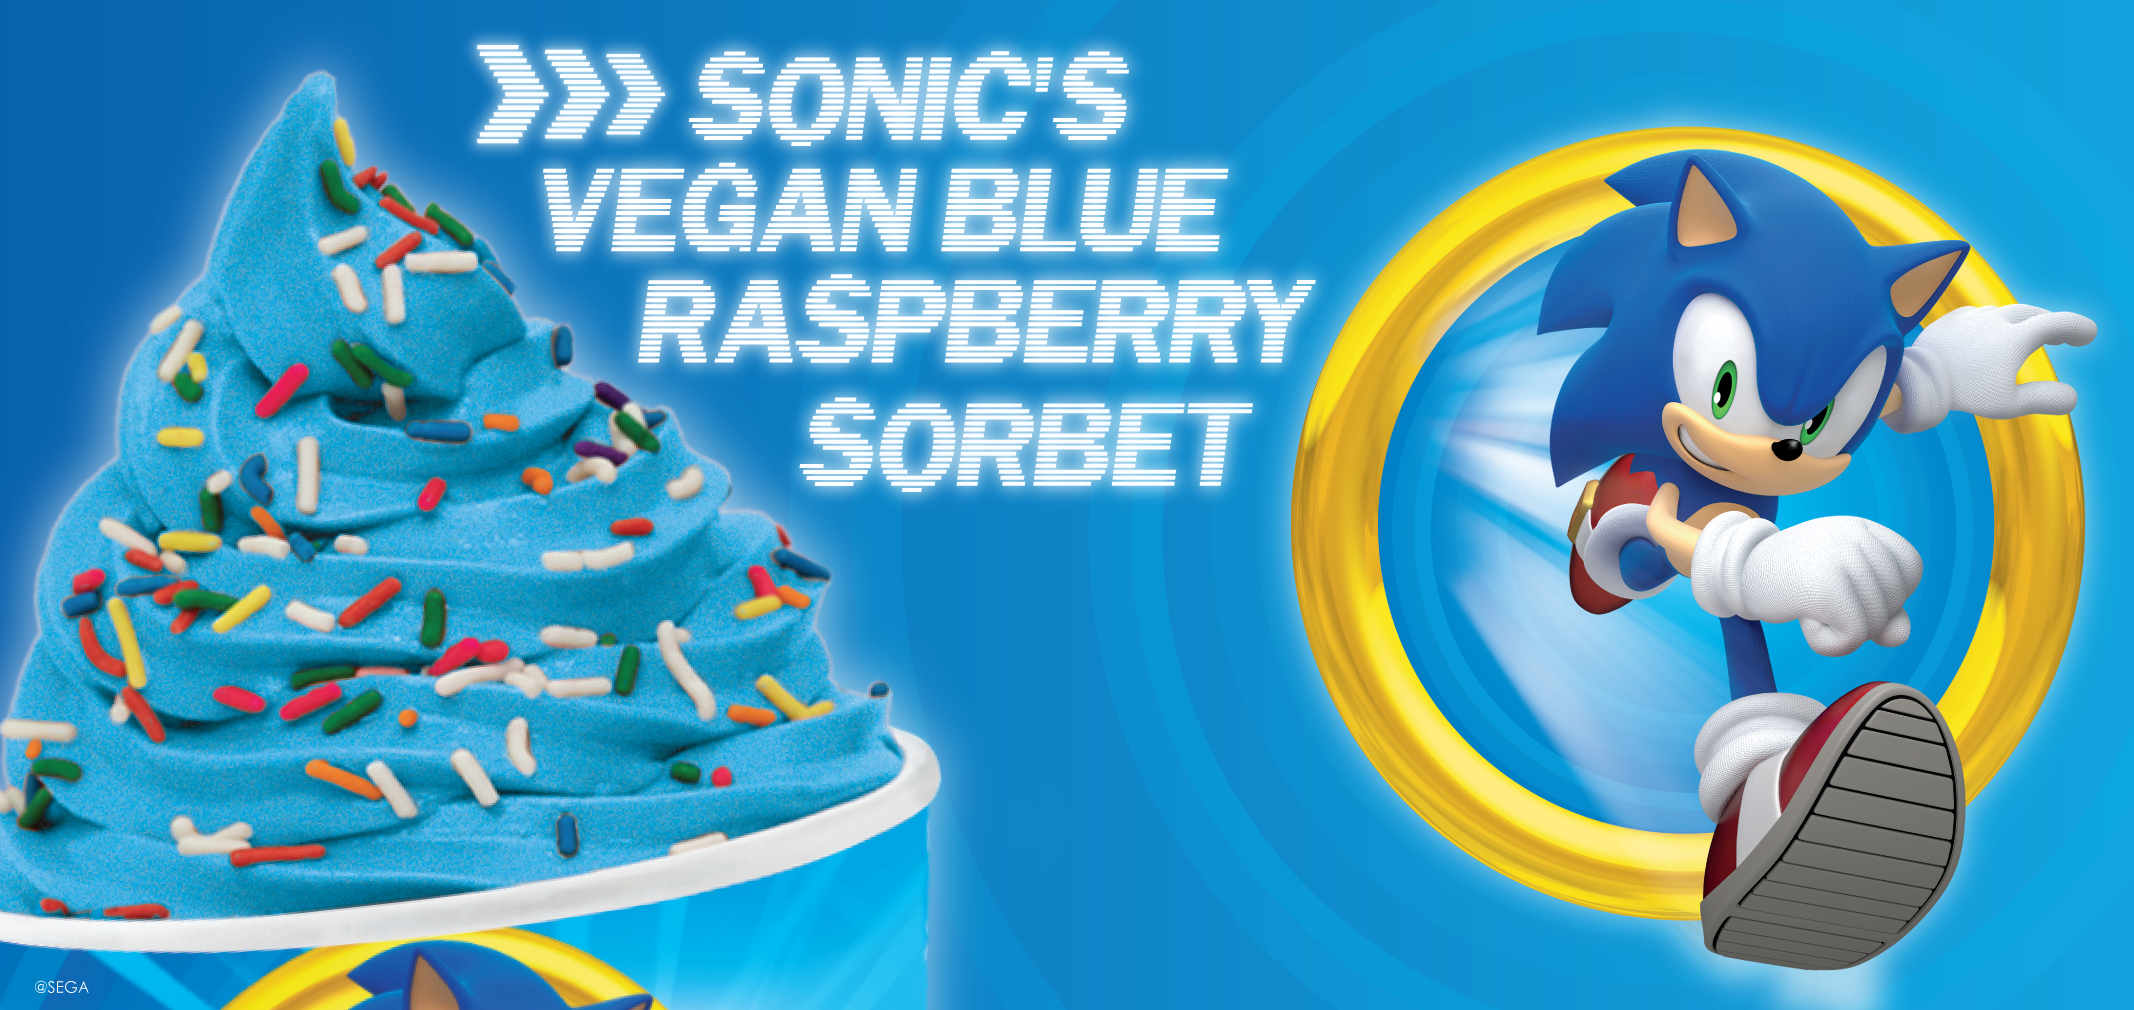 Sonic's Vegan Blue Raspberry Sorbet label image